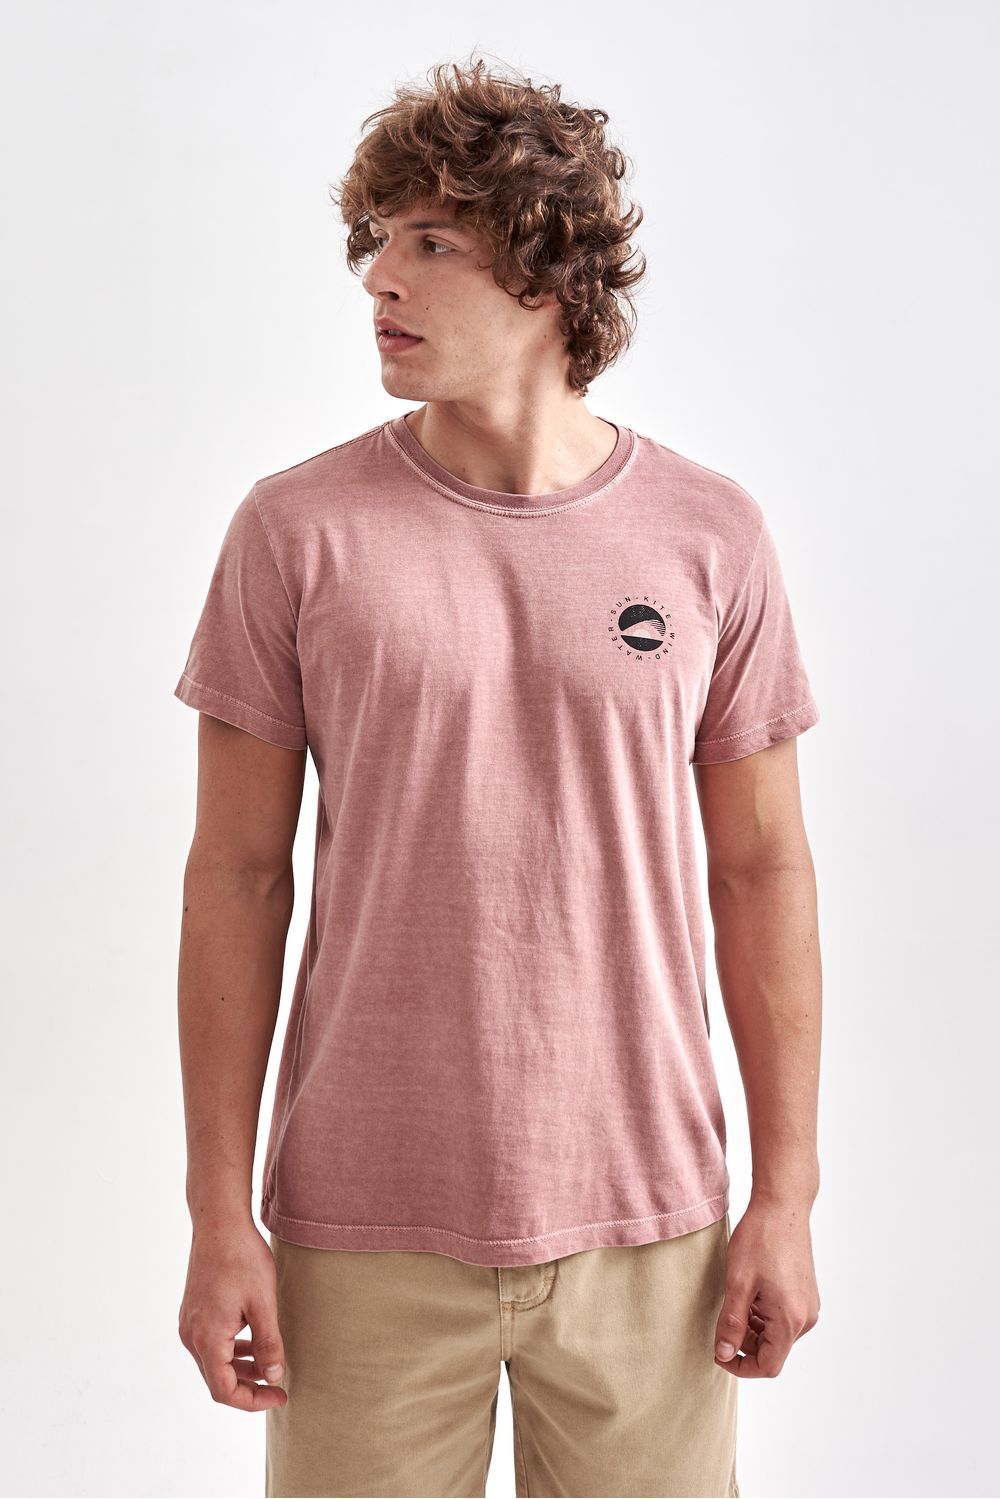 AUSTRAL - Camiseta Kite Sunset Coral